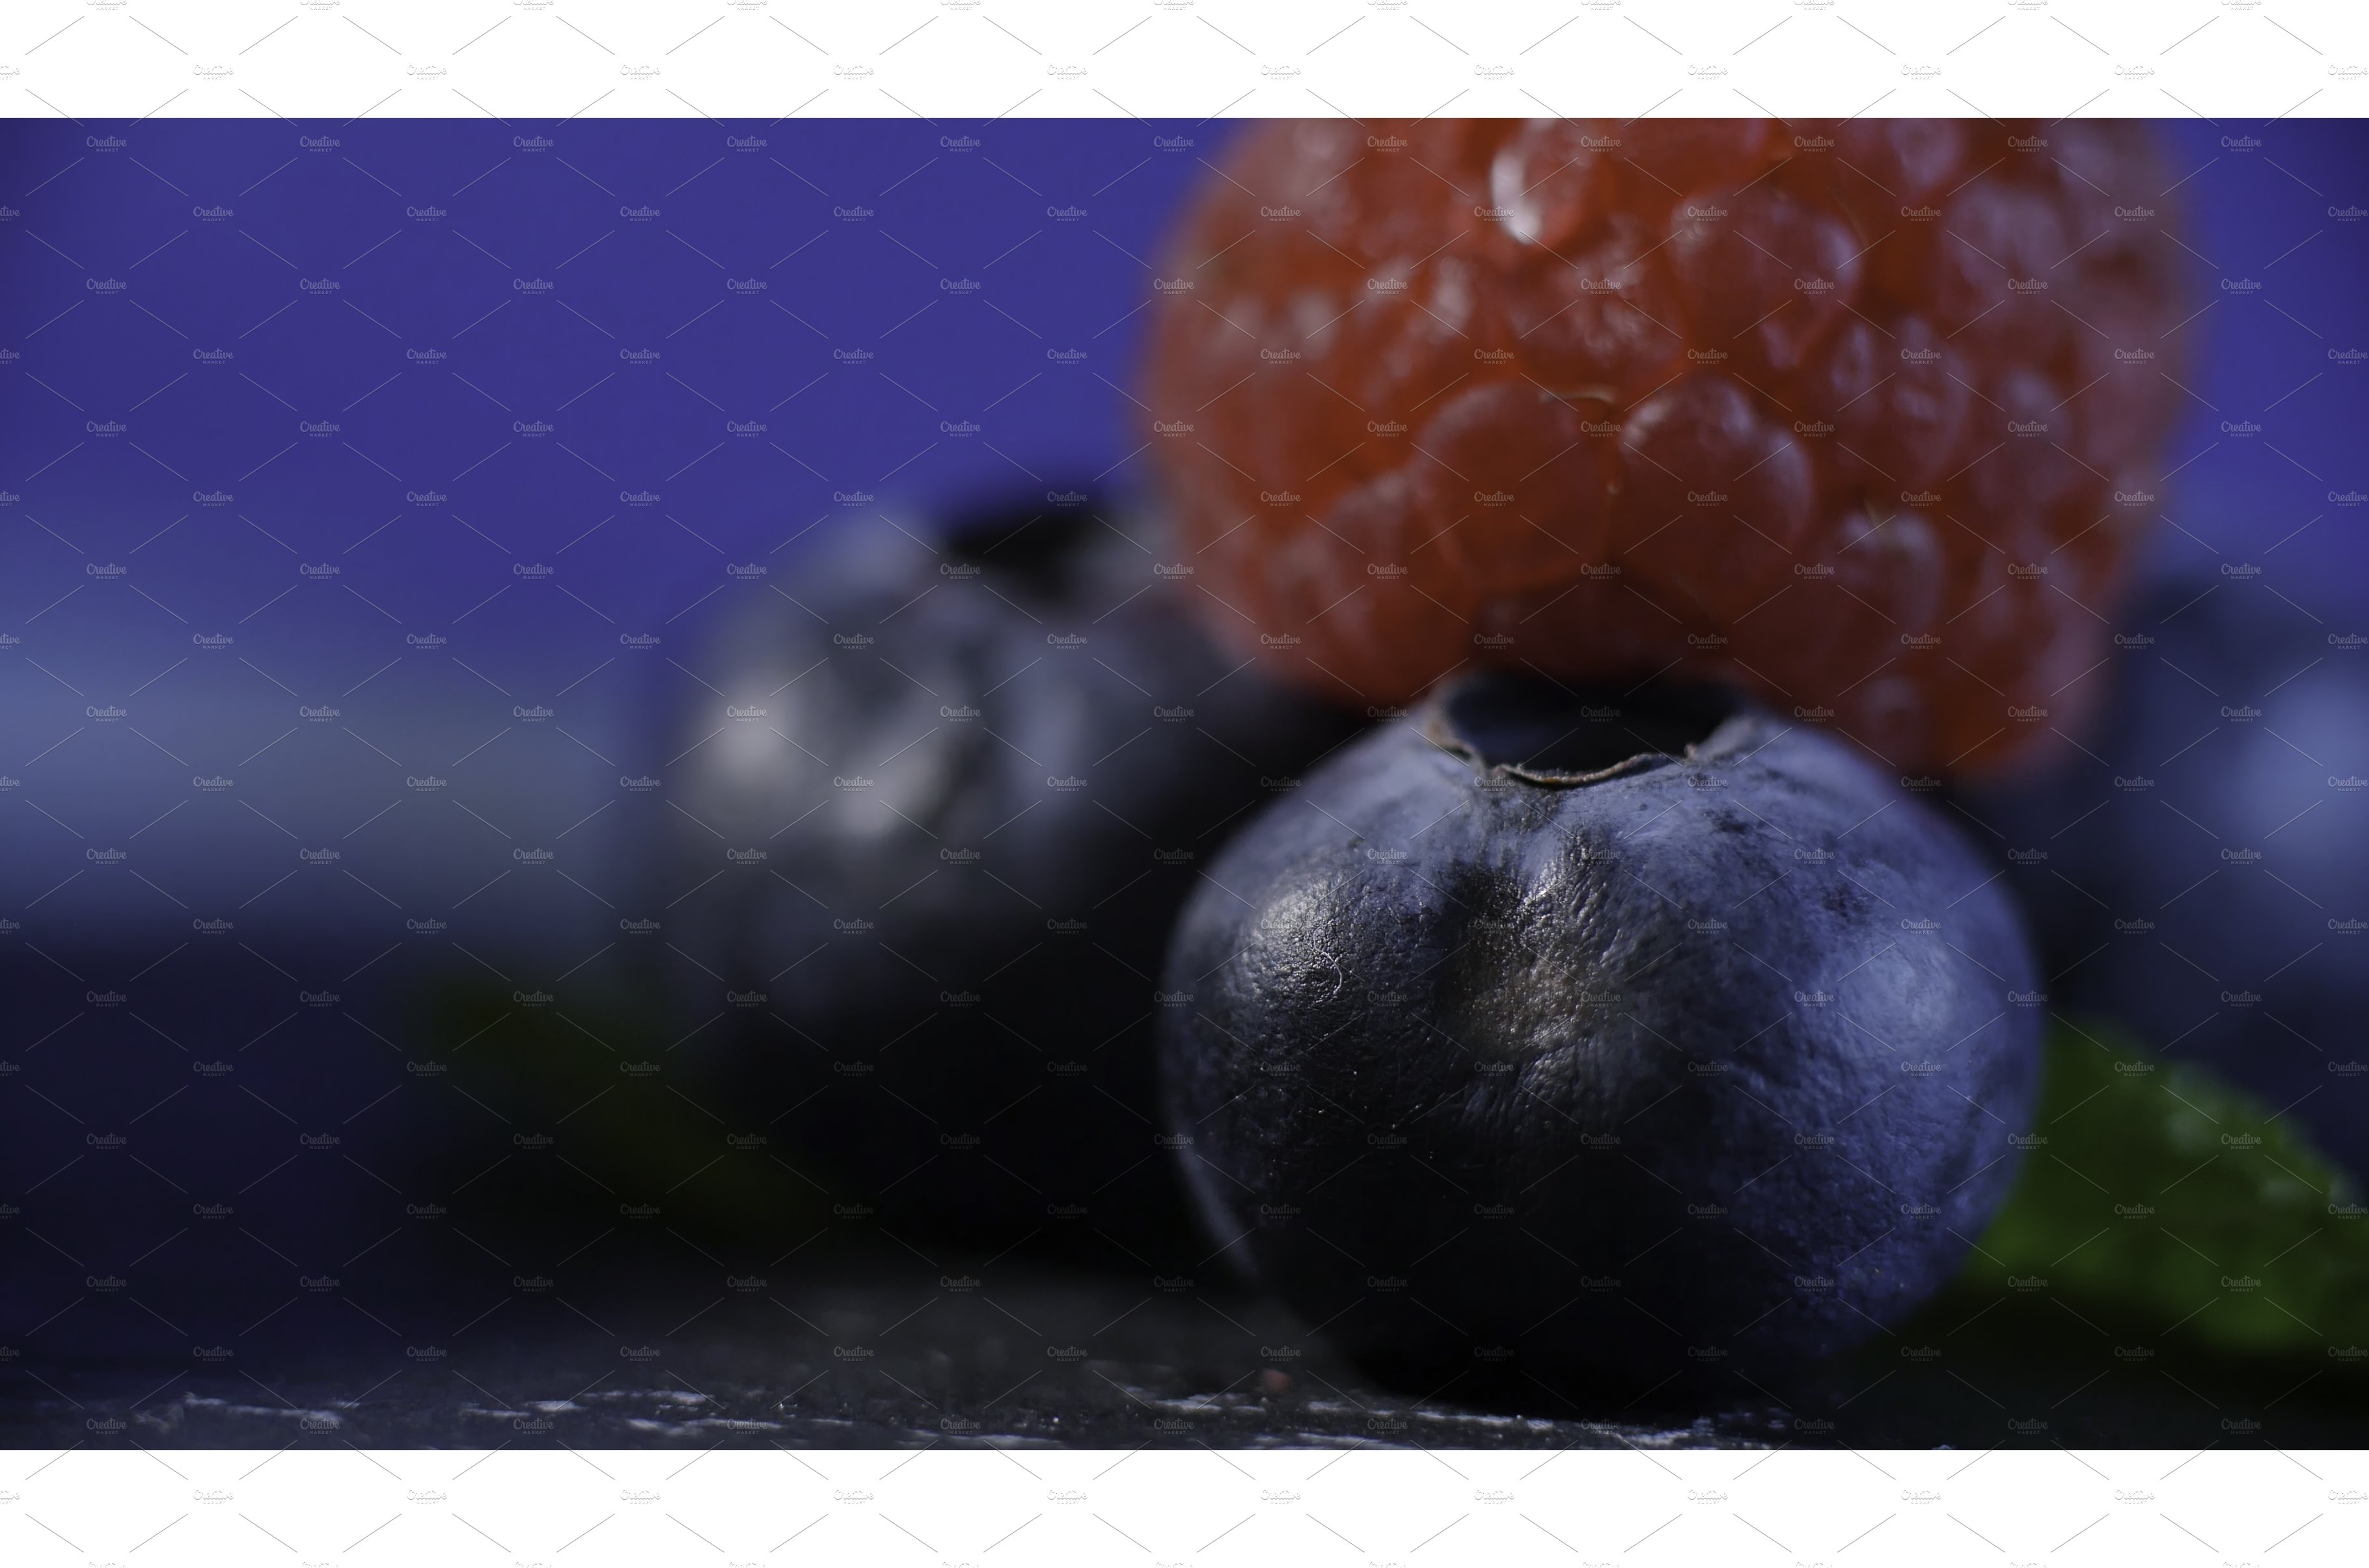 Fresh fruits - blueberry, raspberry cover image.